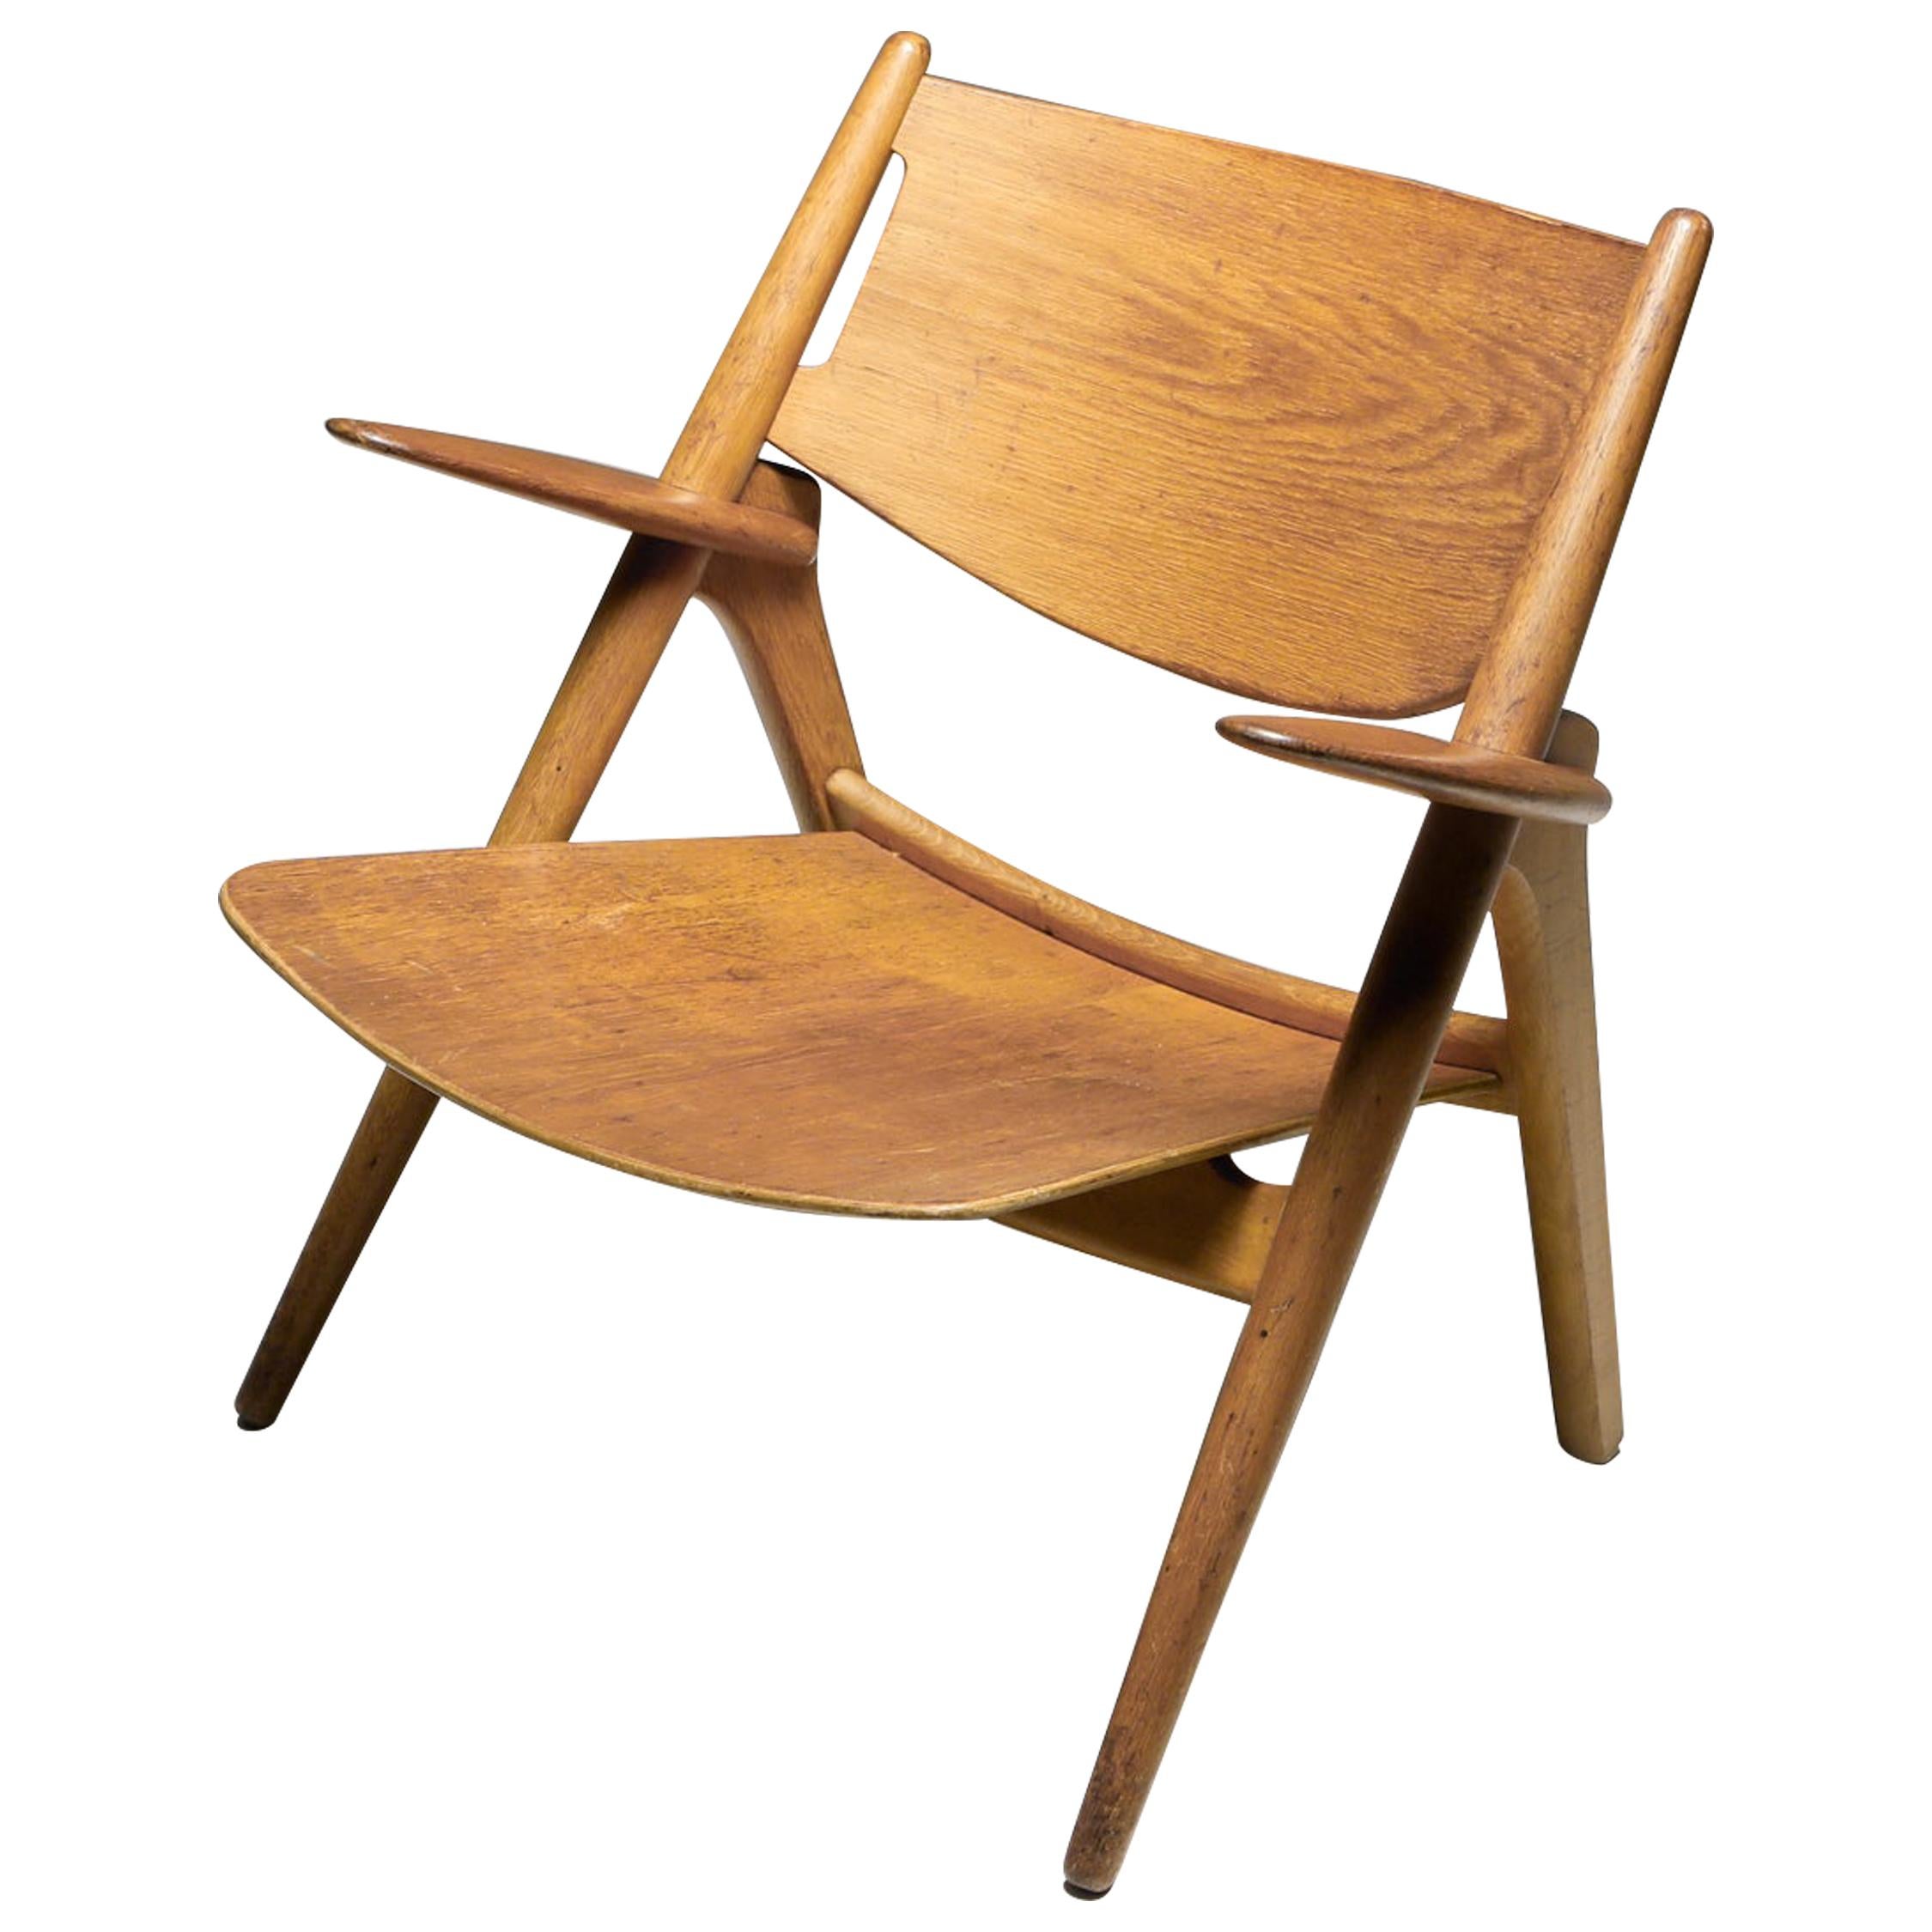 Hans Wegner CH 28 Sawbuck Chair in Oak